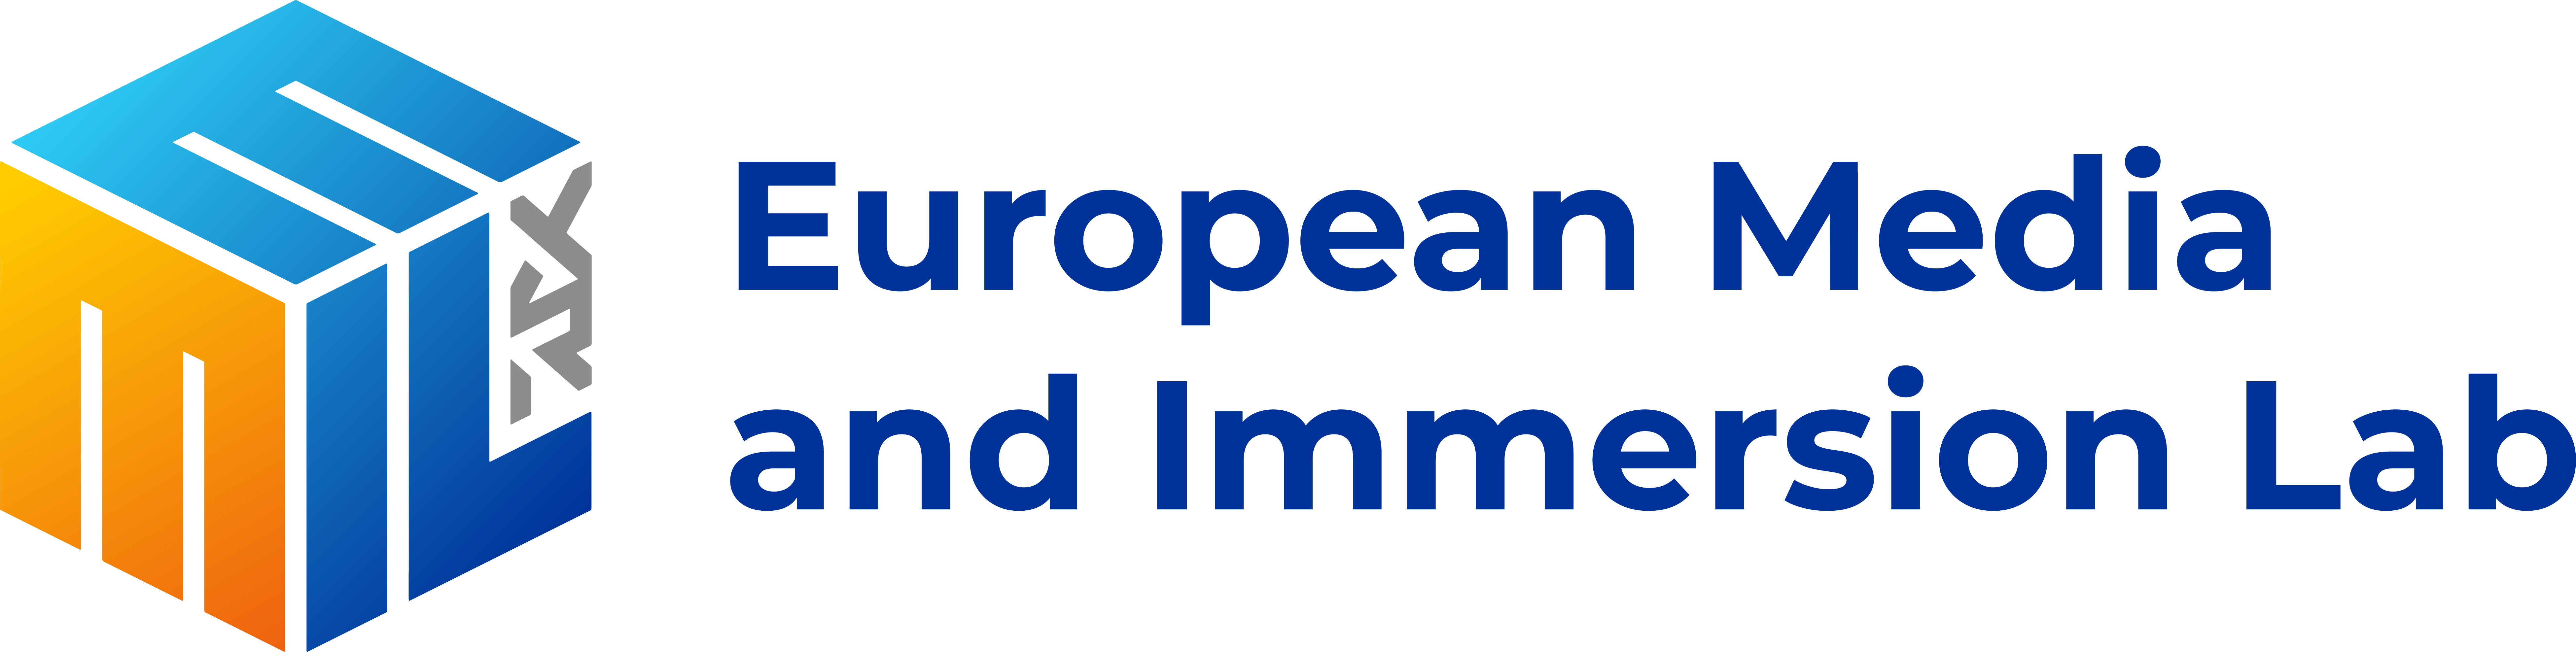 EMIL - European Media and Immersion Lab logo